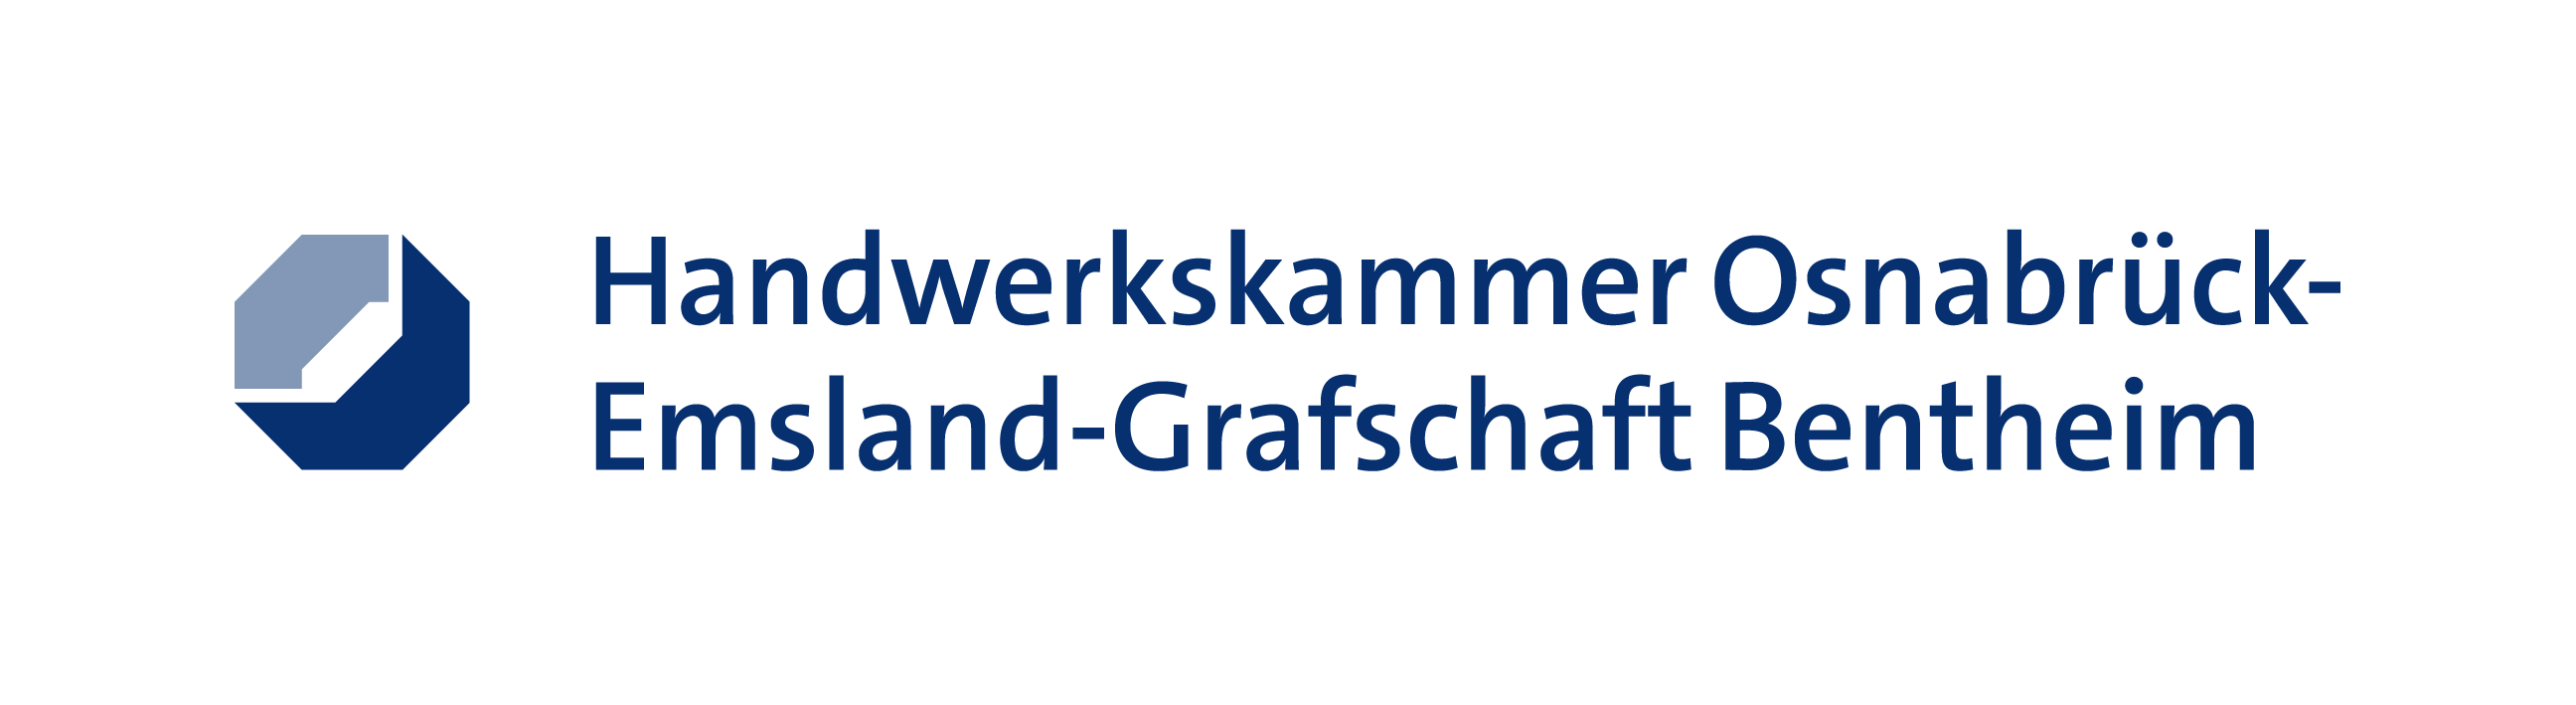 Logo der HWK-Handwerkskammer Osnabrück